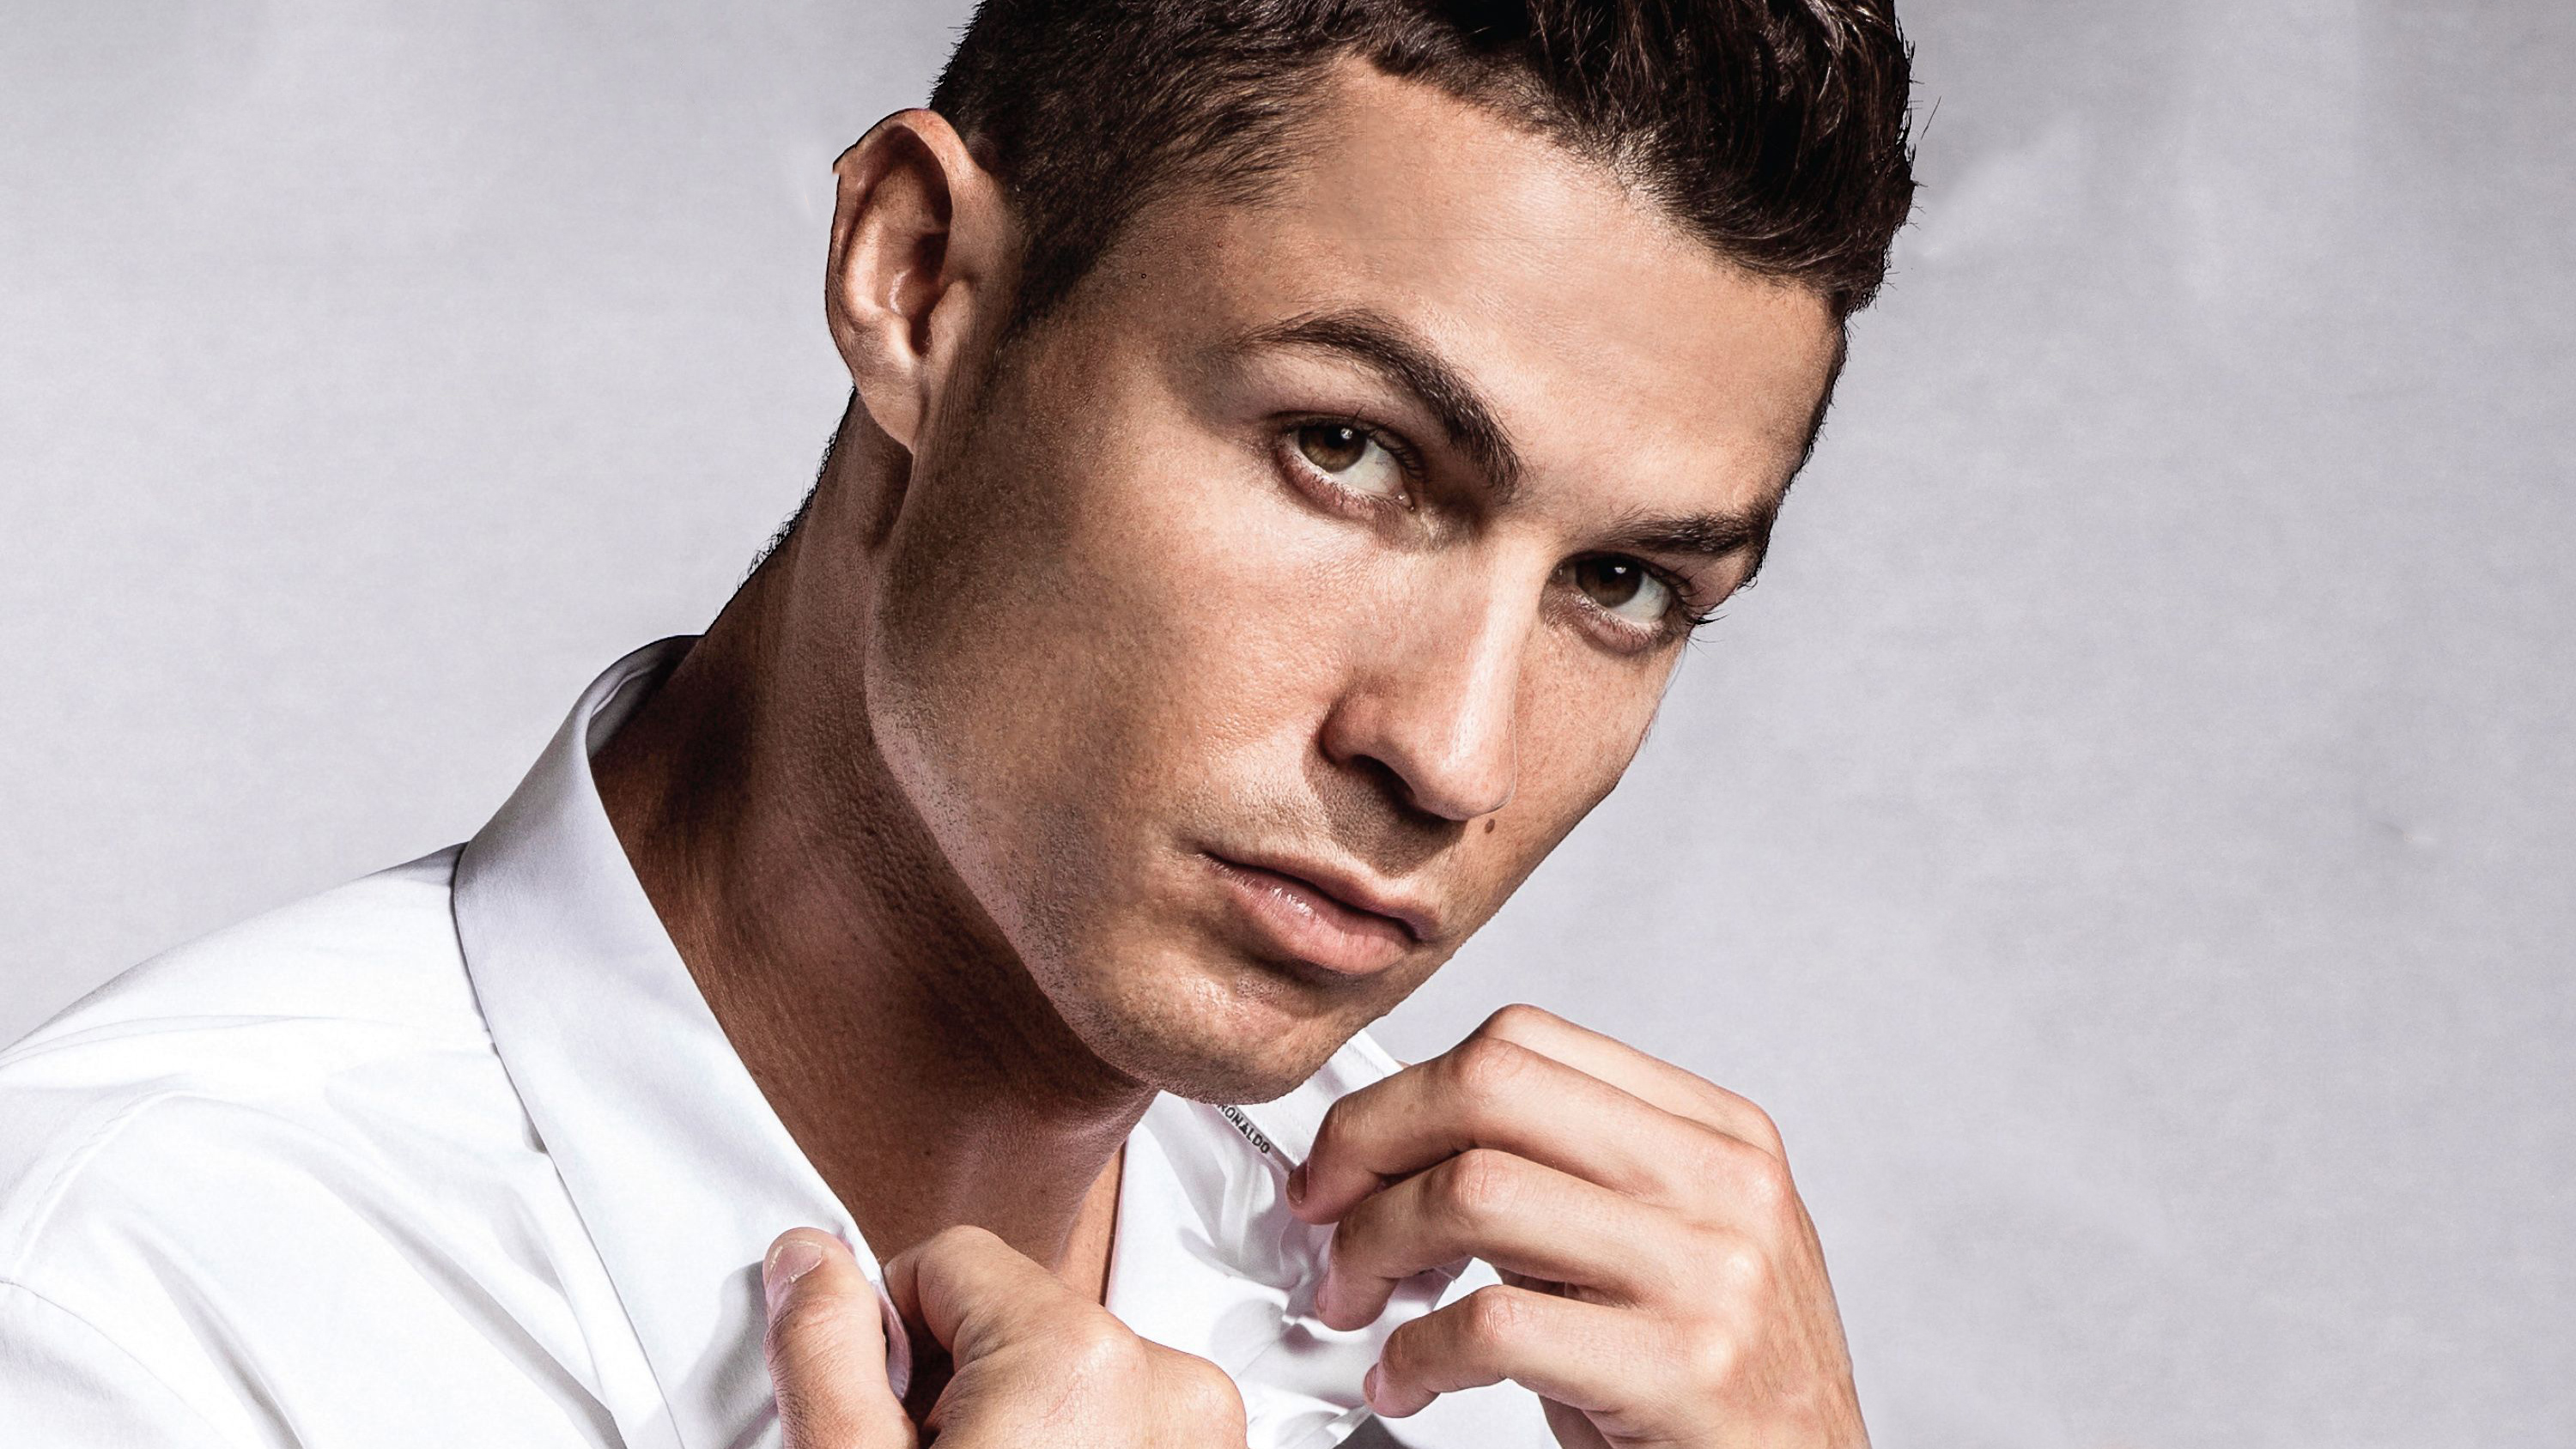 Ronaldo 2020 Wallpapers